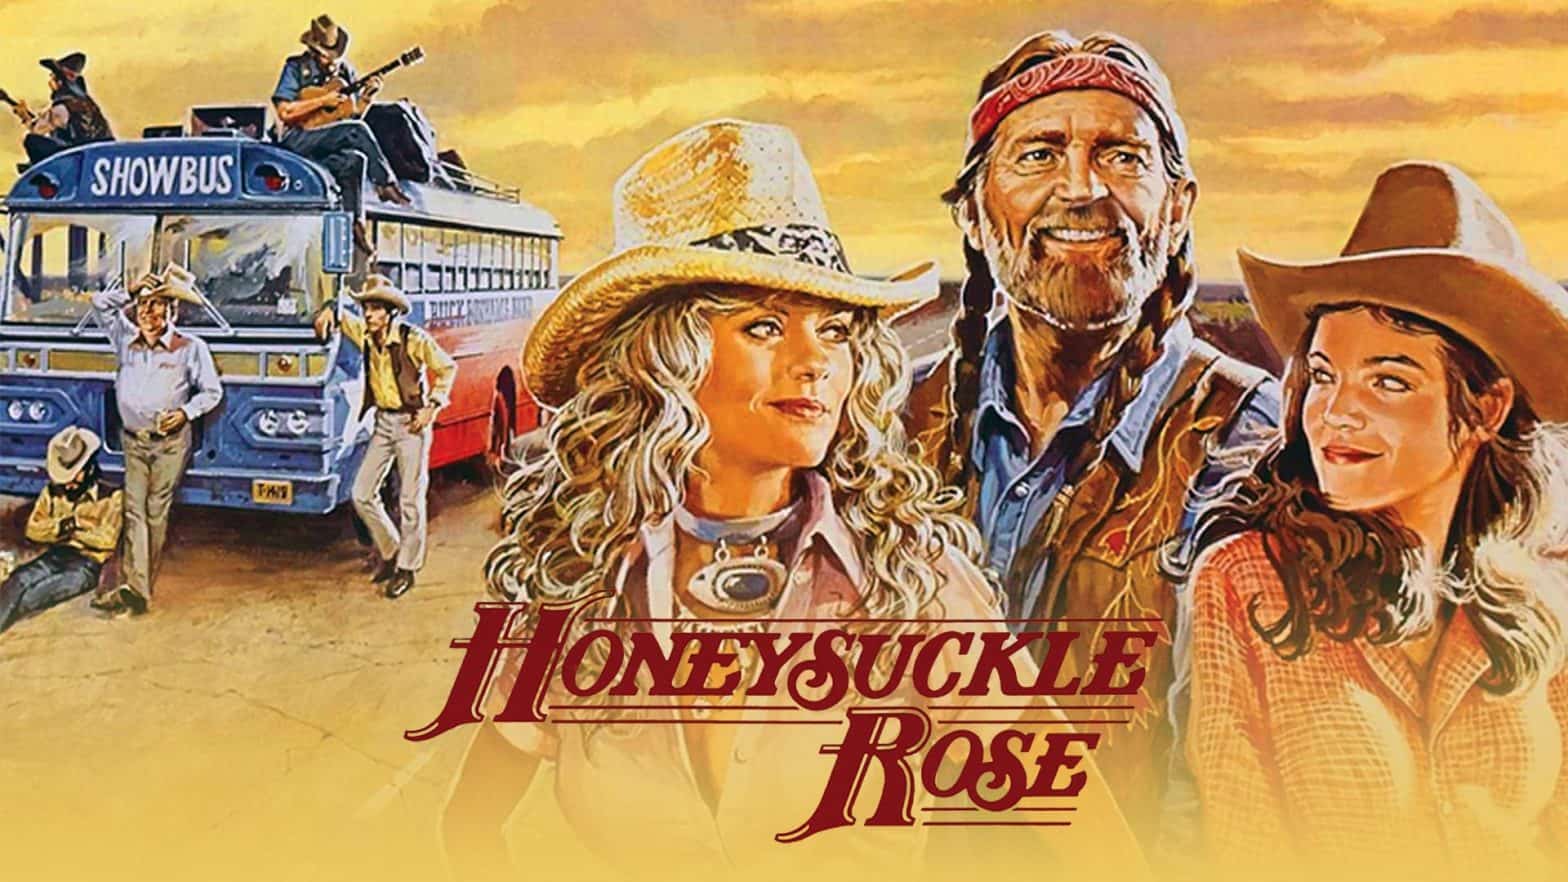 Poster for the film, Honeysuckle Rose (Credits: Warner Bros.)